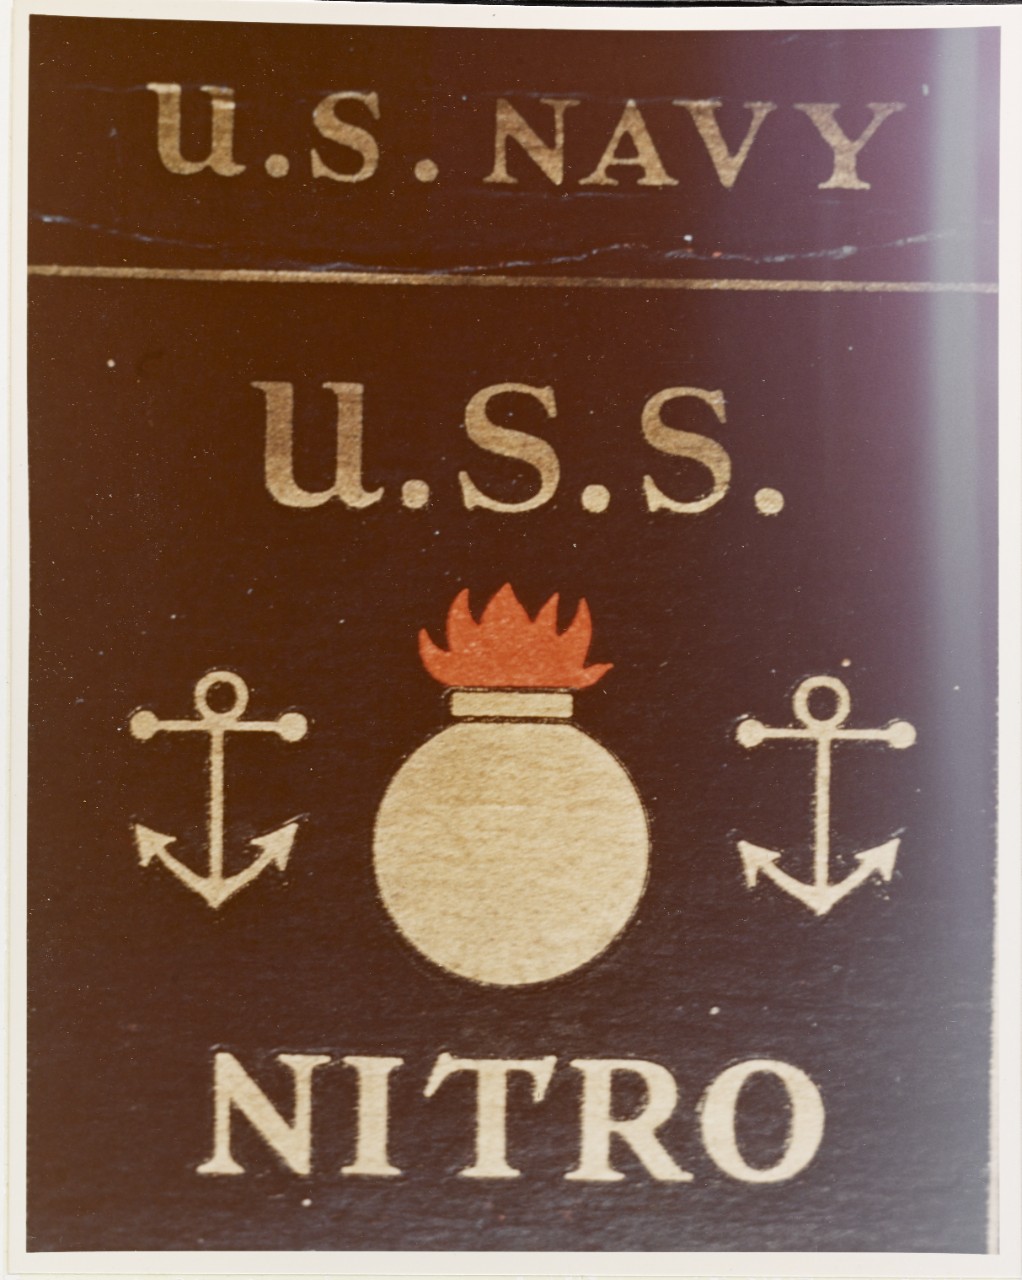 Insignia: USS NITRO (AE-23)